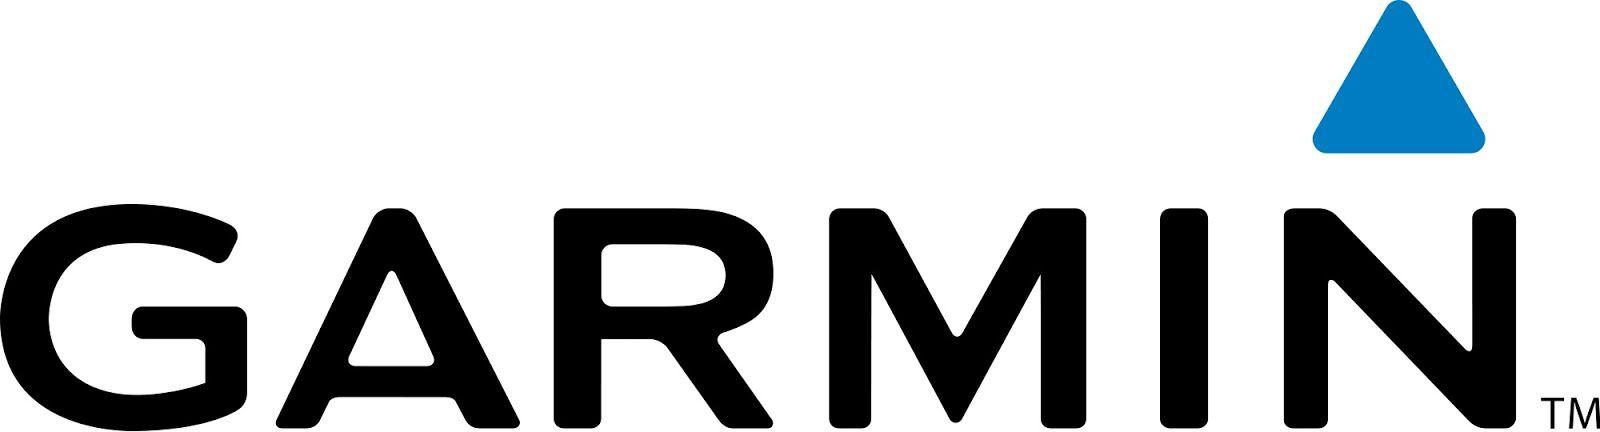 Garmin Pay Logo - Garmin partners OCBC Bank to launch Garmin Pay in Singapore